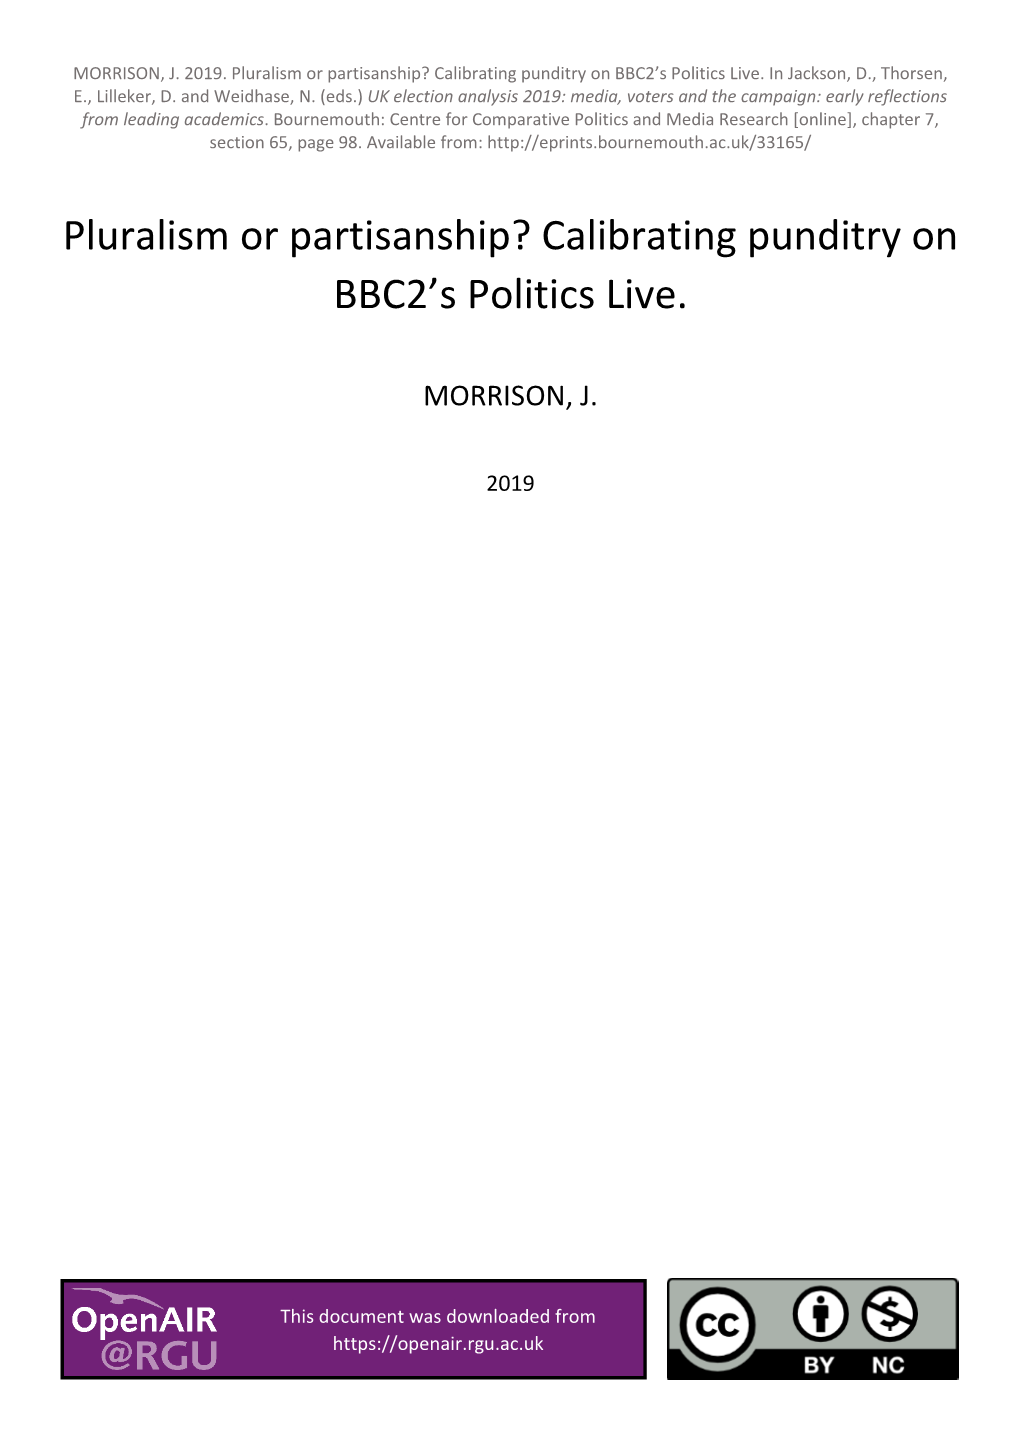 Pluralism Or Partisanship? Calibrating Punditry on BBC2's Politics Live